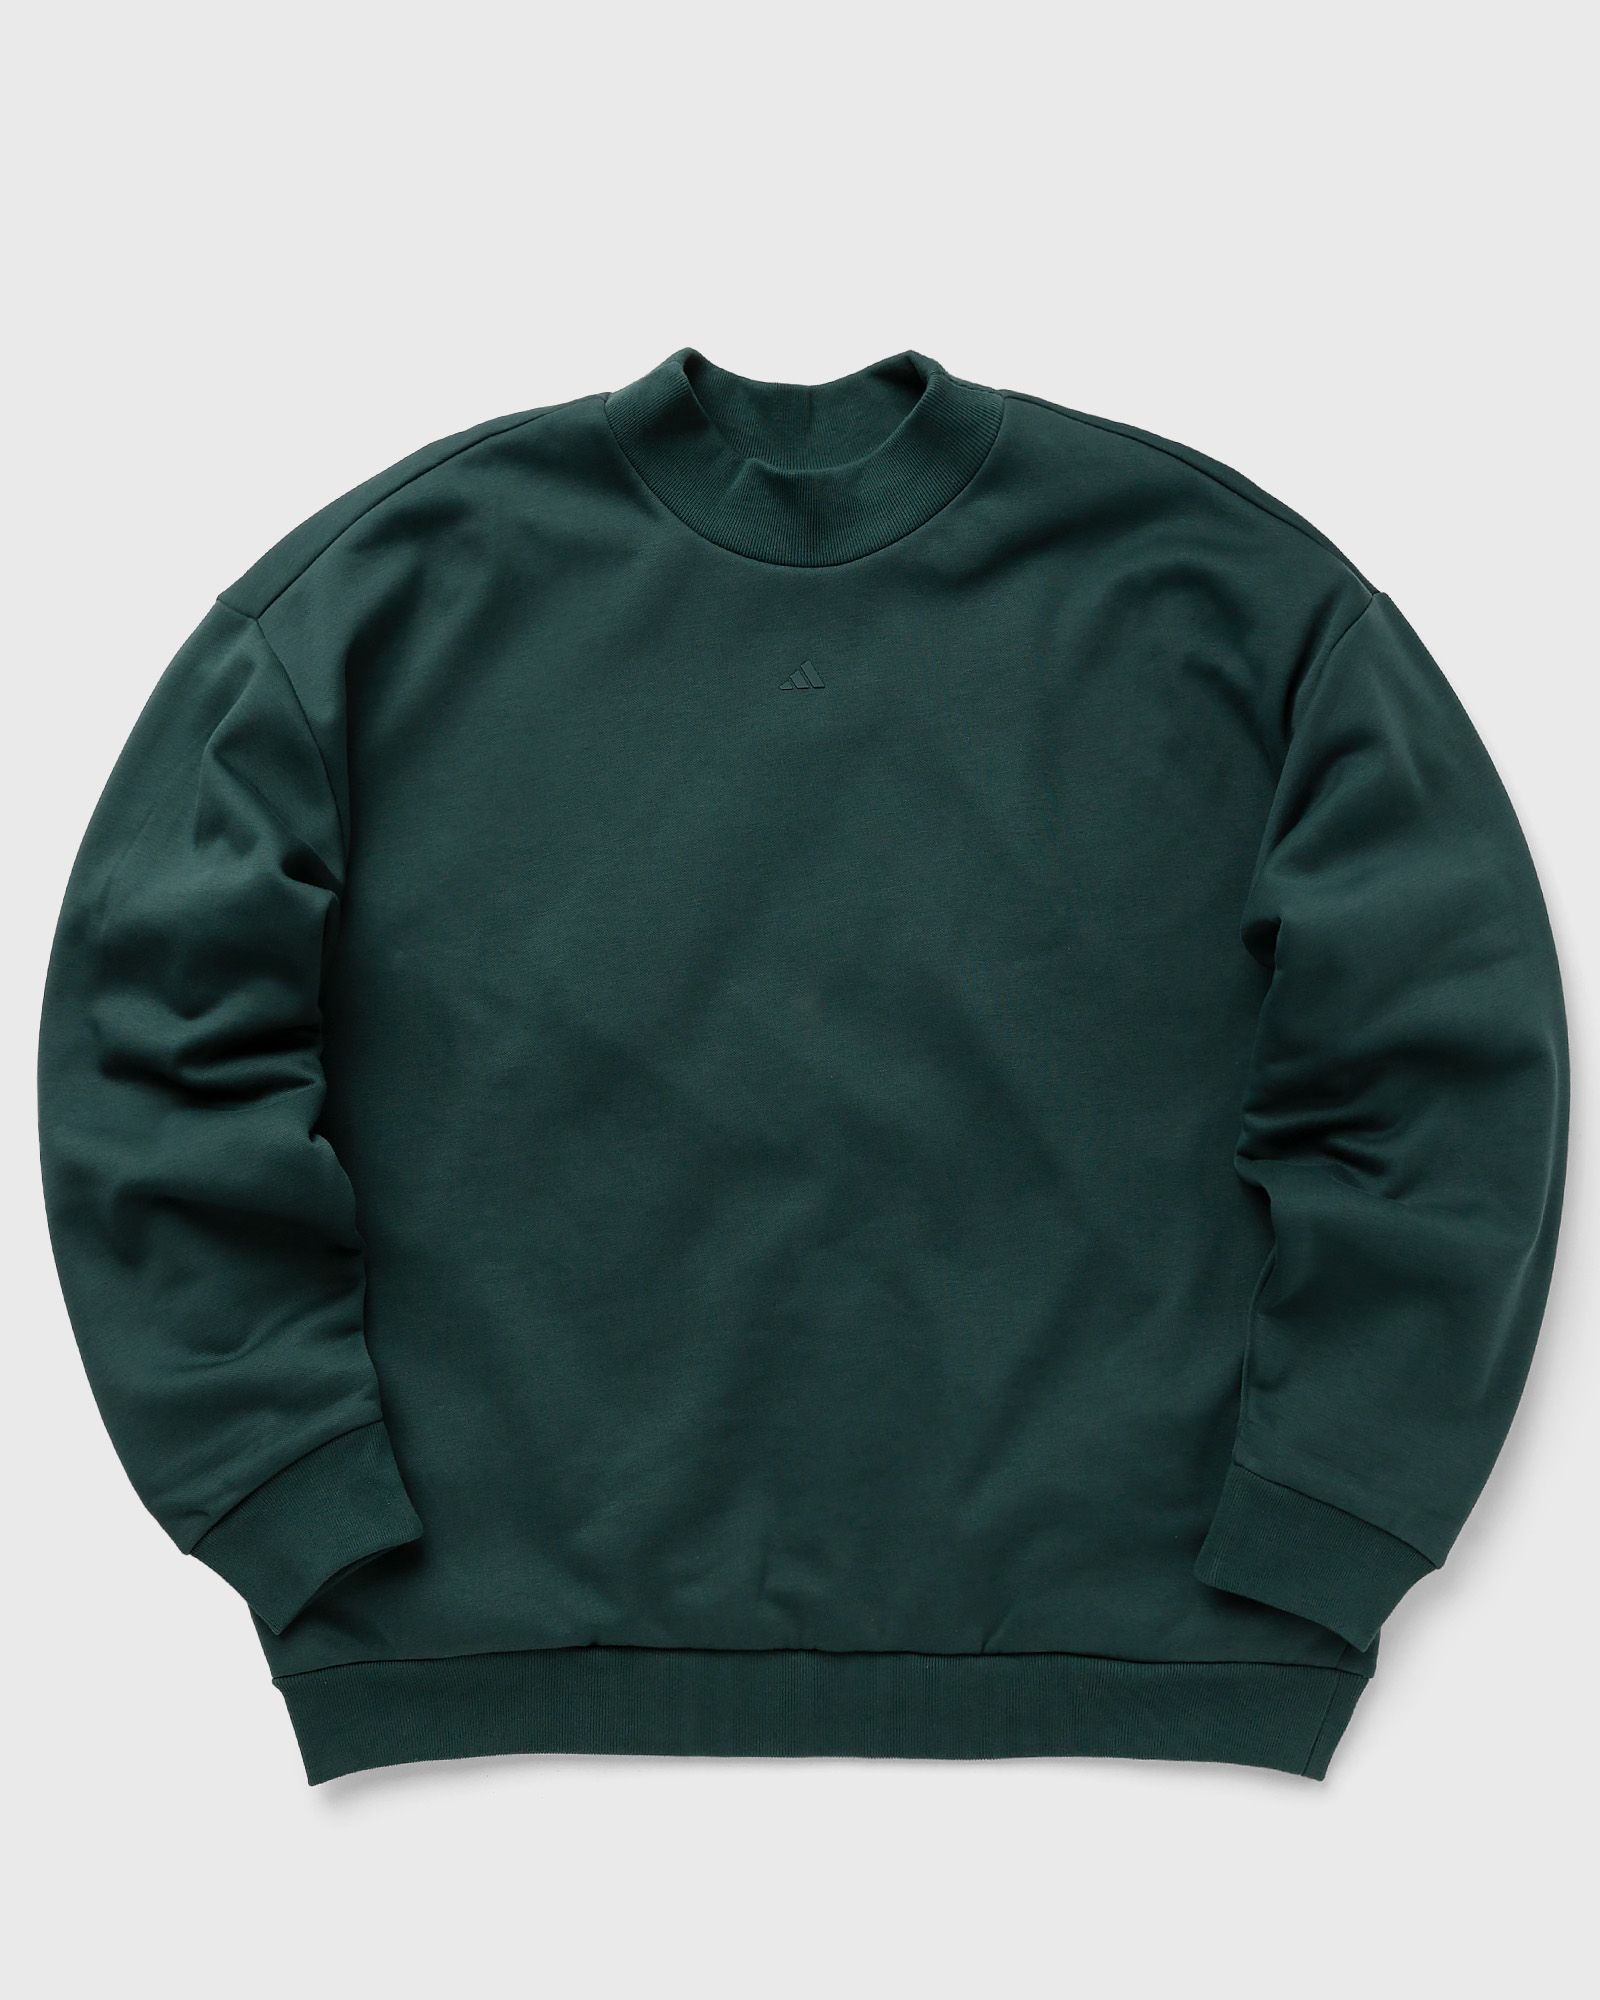 Adidas - basketball fleece crew sweatshirt men sweatshirts green in größe:l